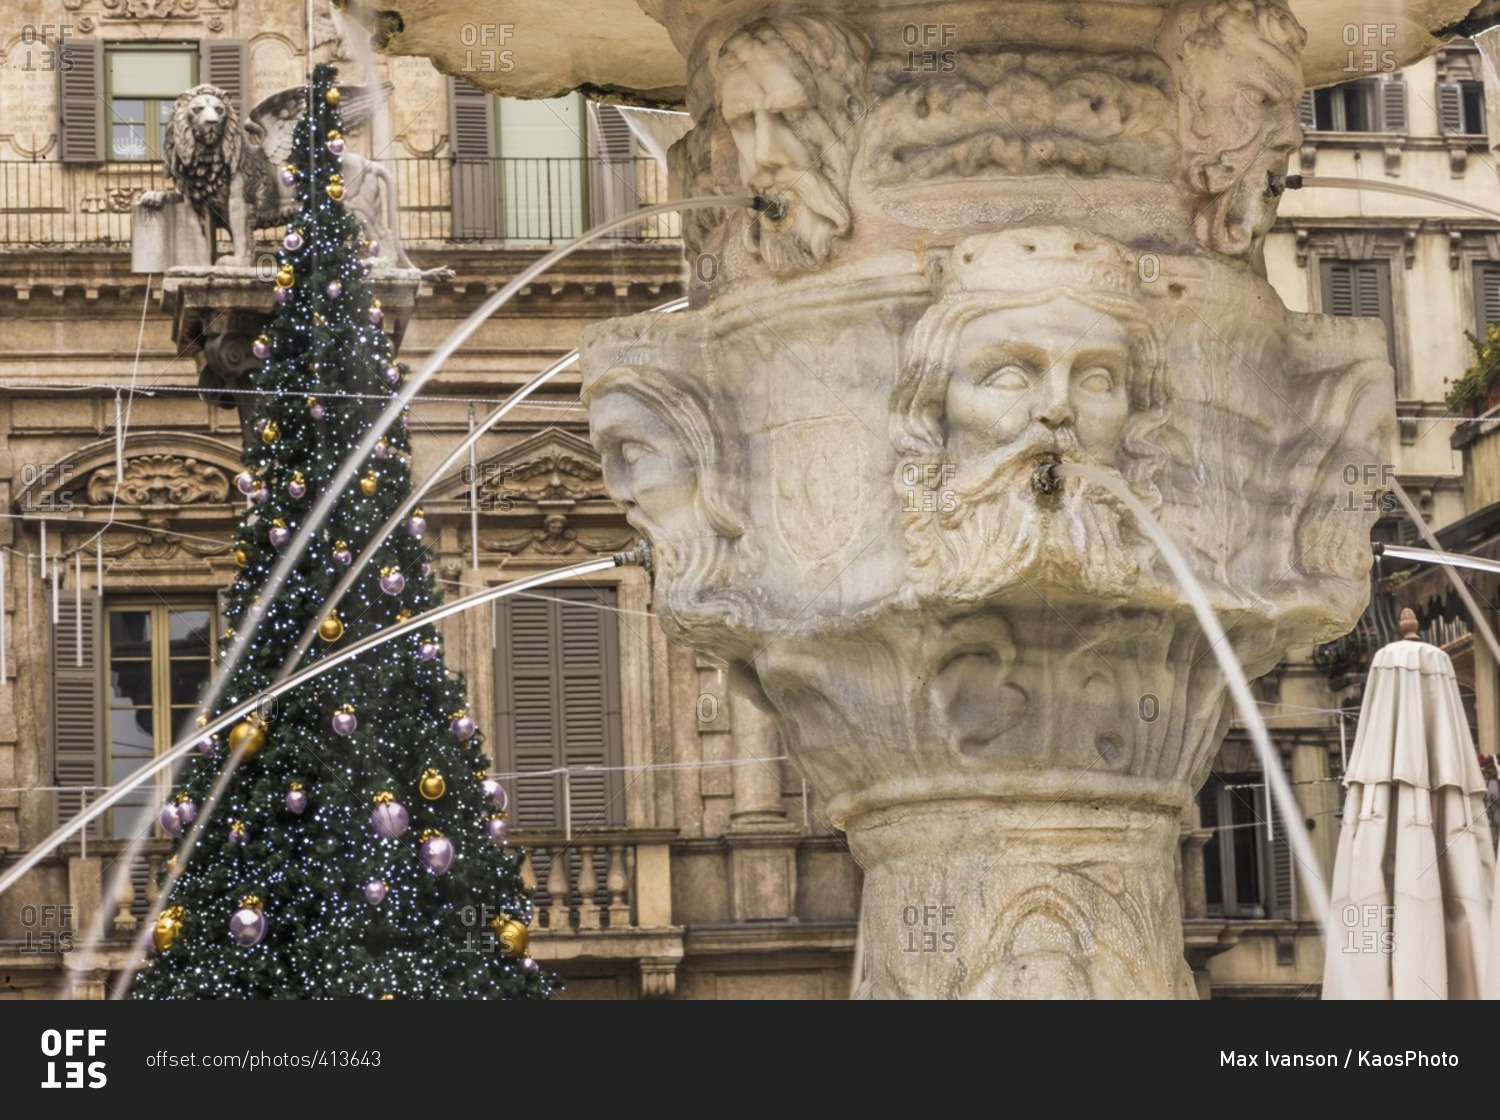 Piazza delle Erbe and detail of the Fontana Madonna Verona and Christmas tree, Verona, Italy